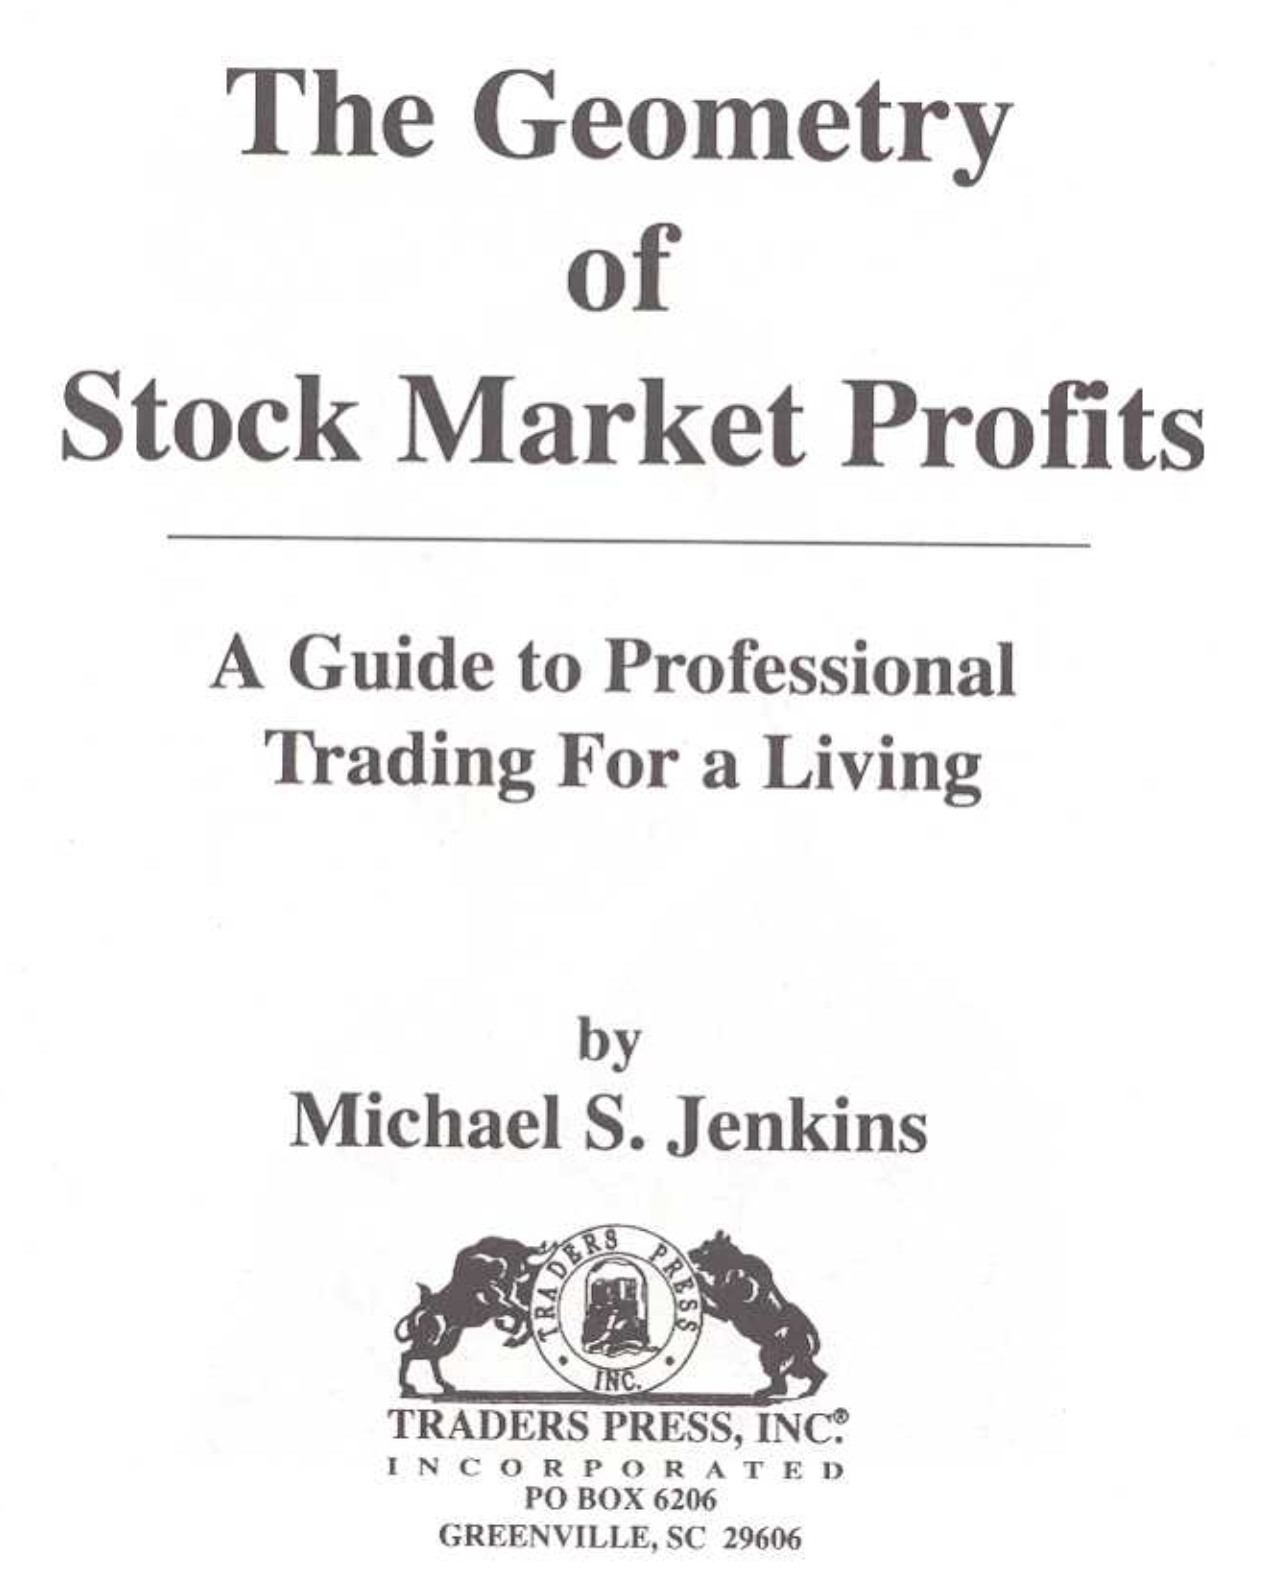 The Geometry Of Stock Market Profits By Michael S. Jenkins